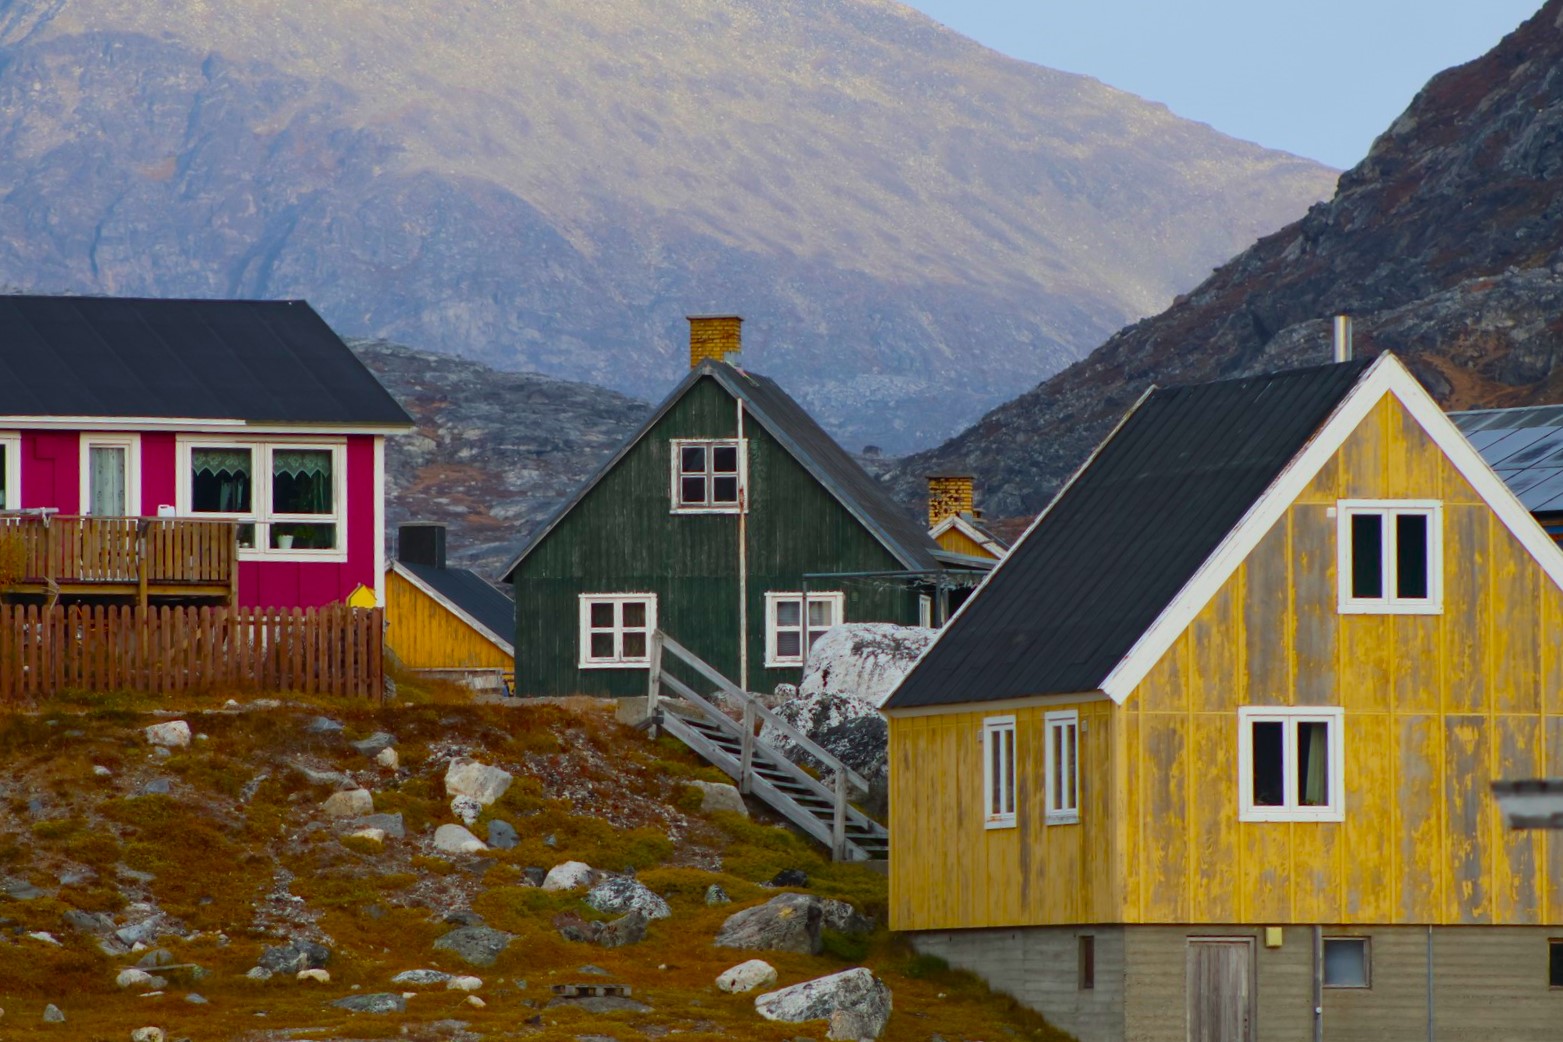 Nanortalik, Greenland - away from the town center